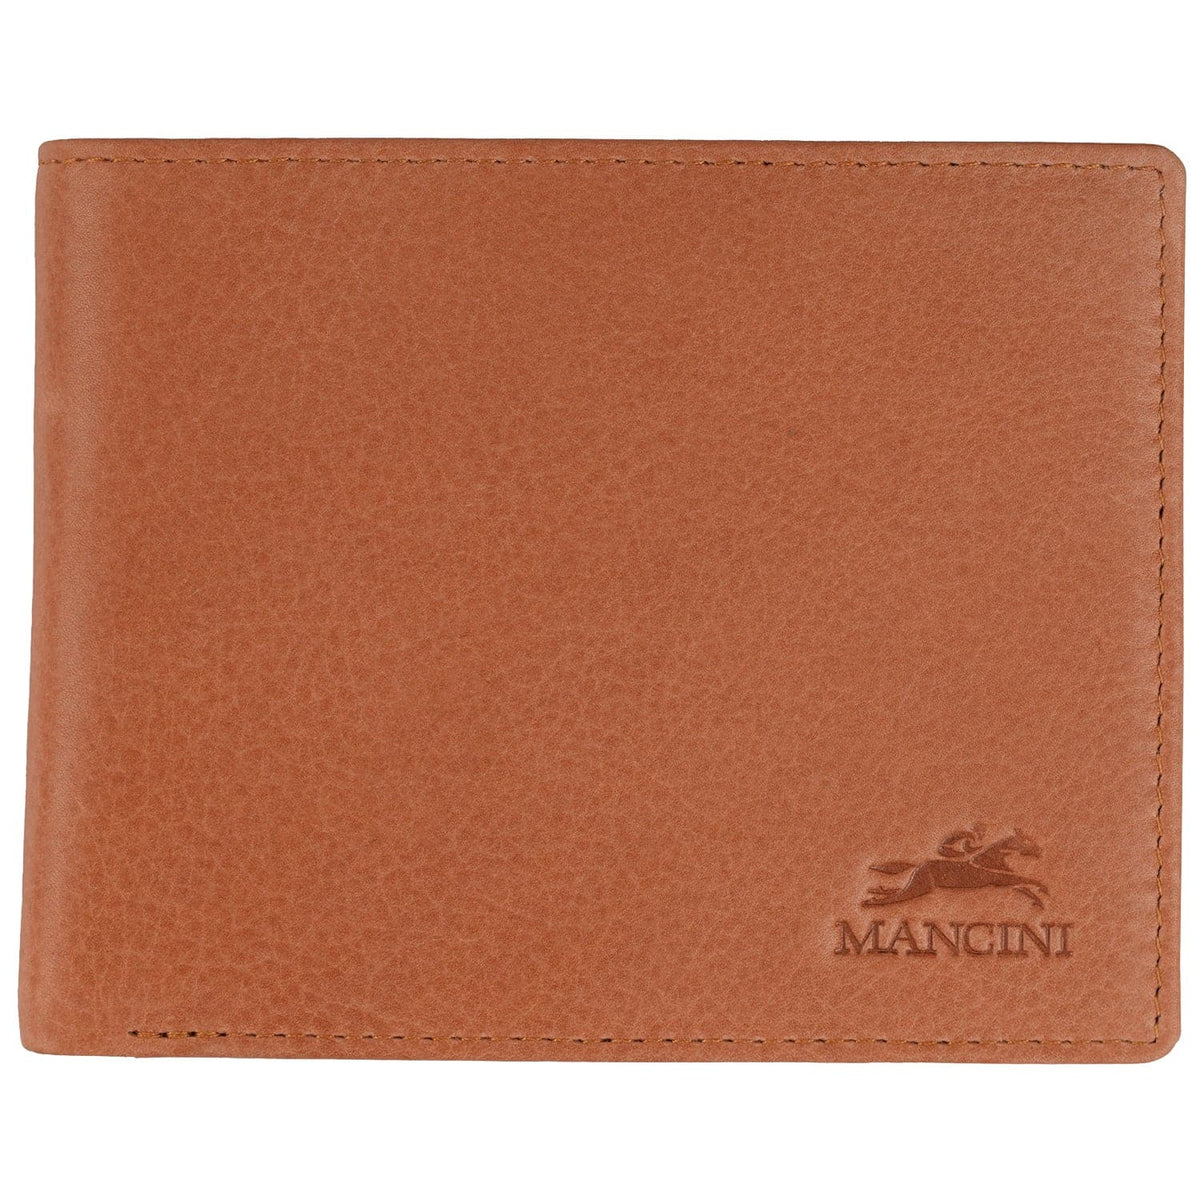 Mancini Bellagio RFID Billfold with Coin Pocket